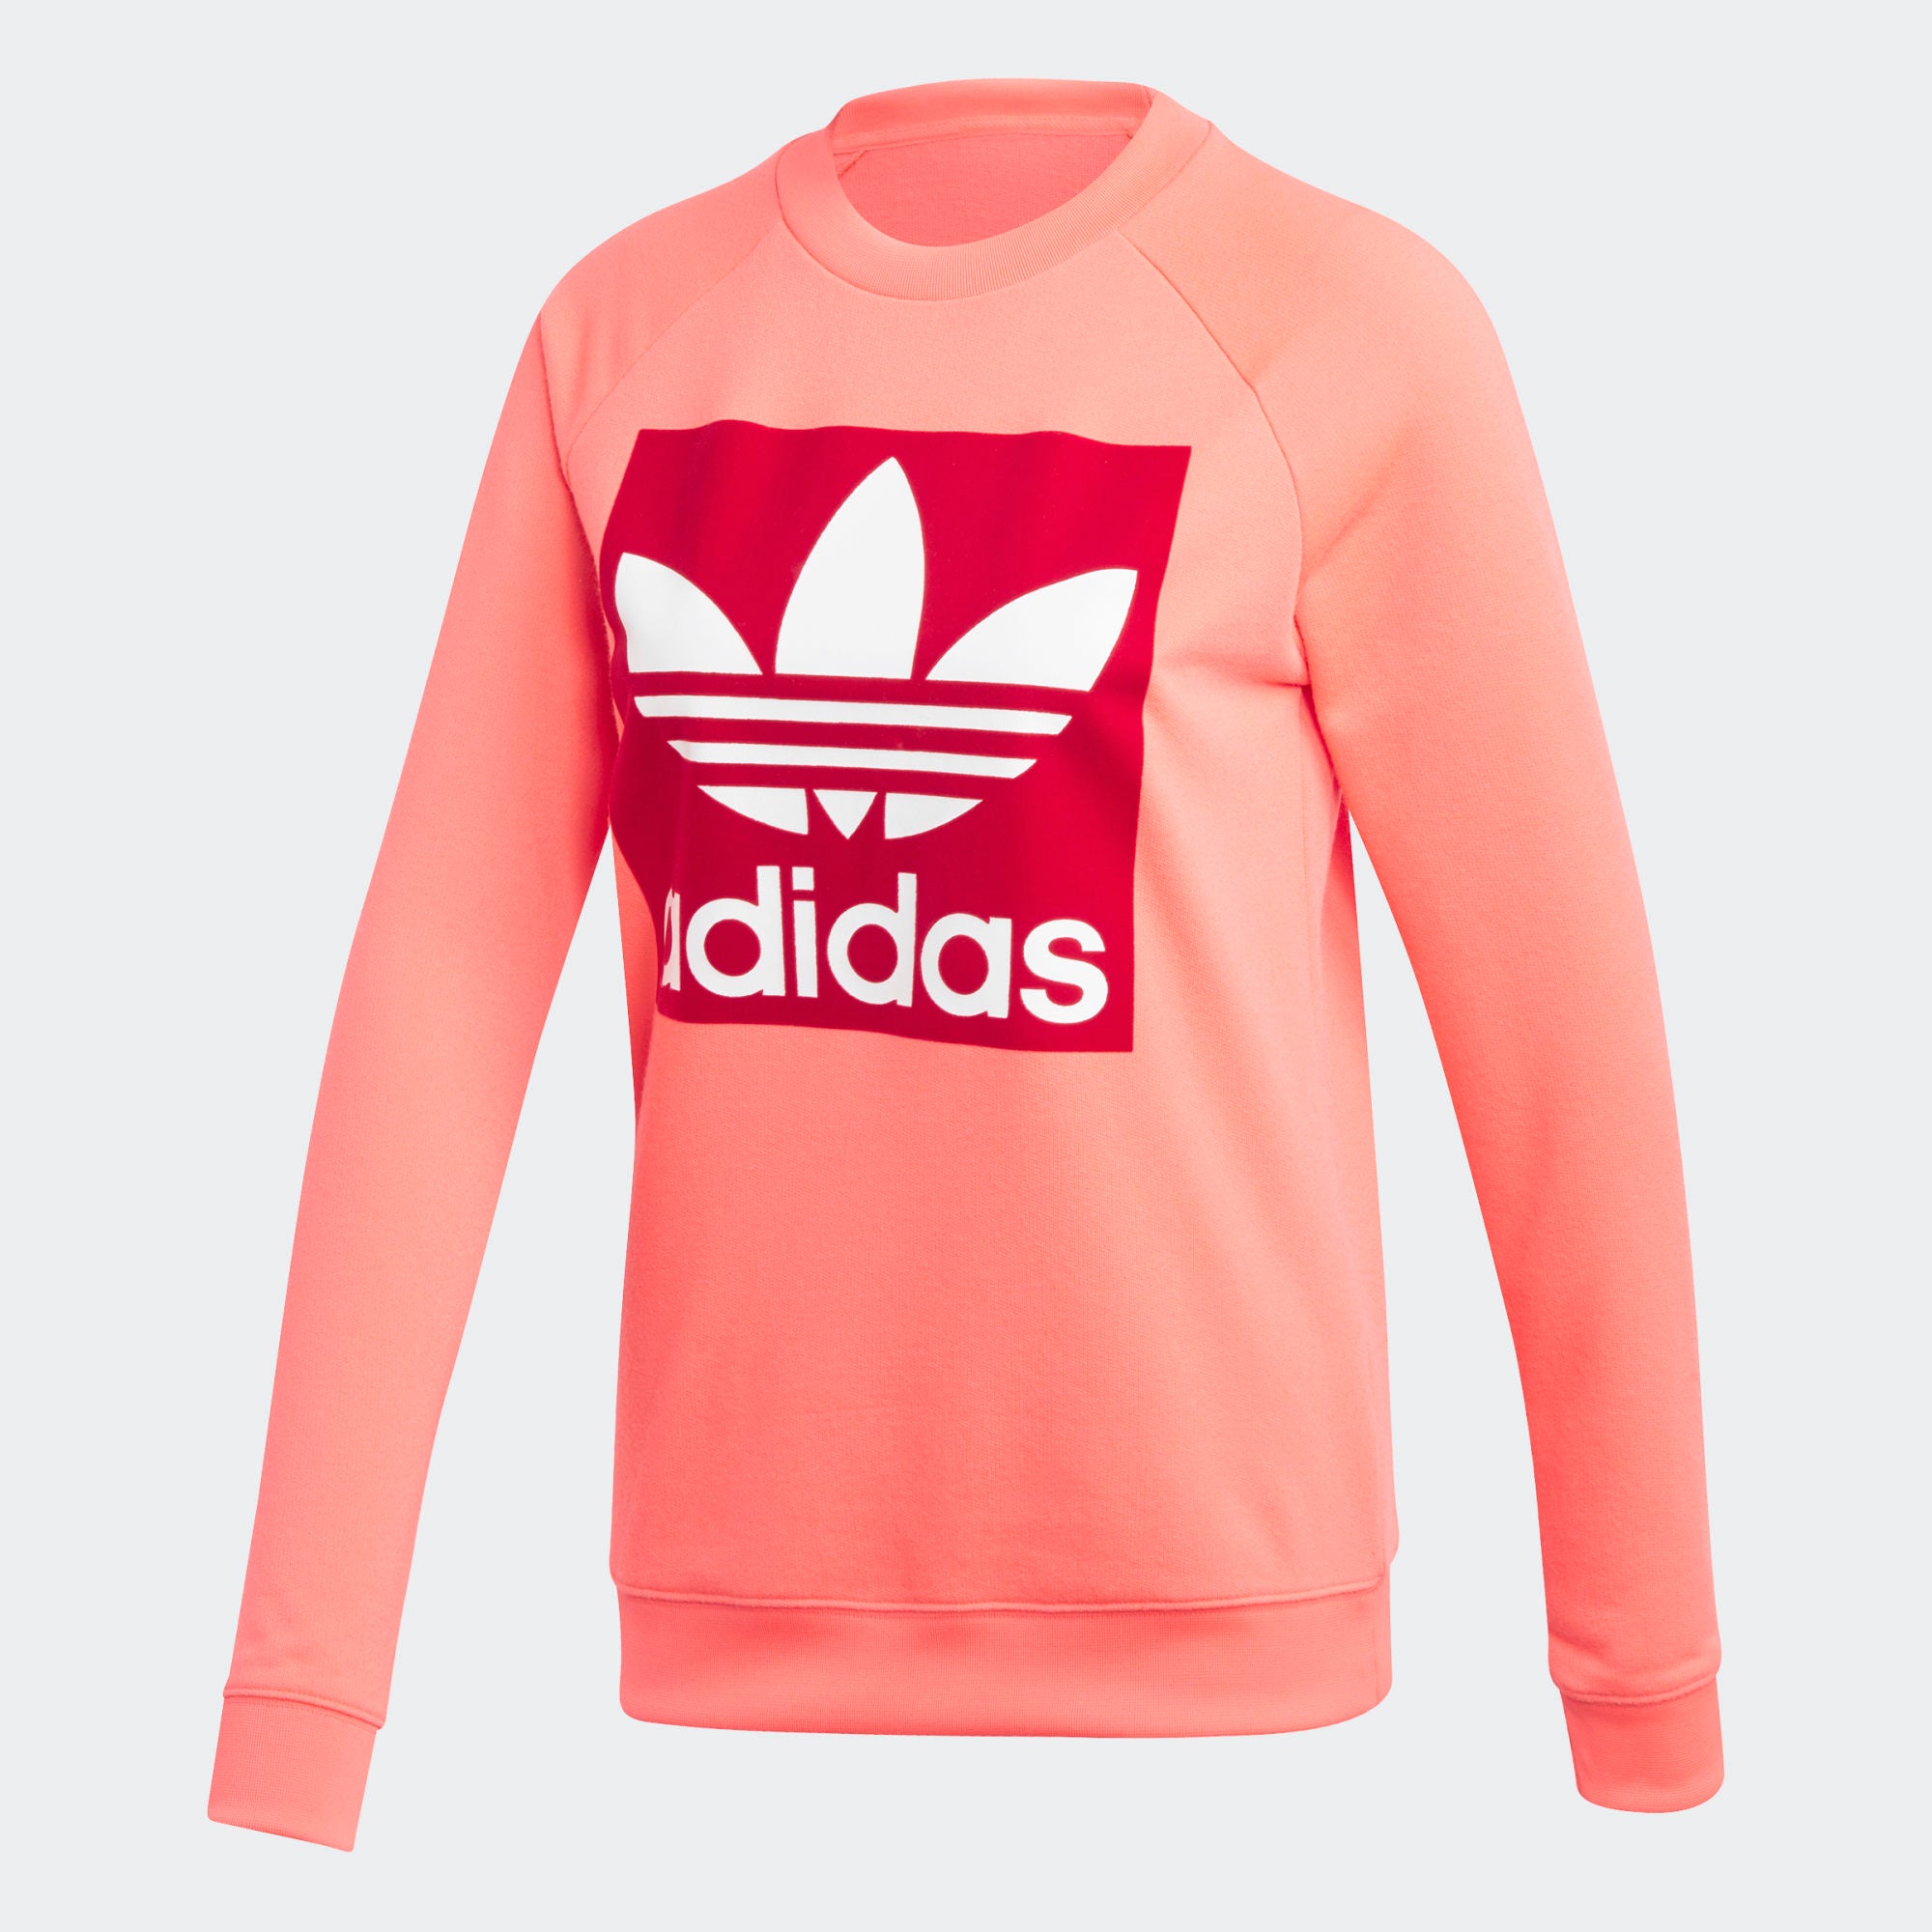 women's adidas trefoil crewneck sweatshirt